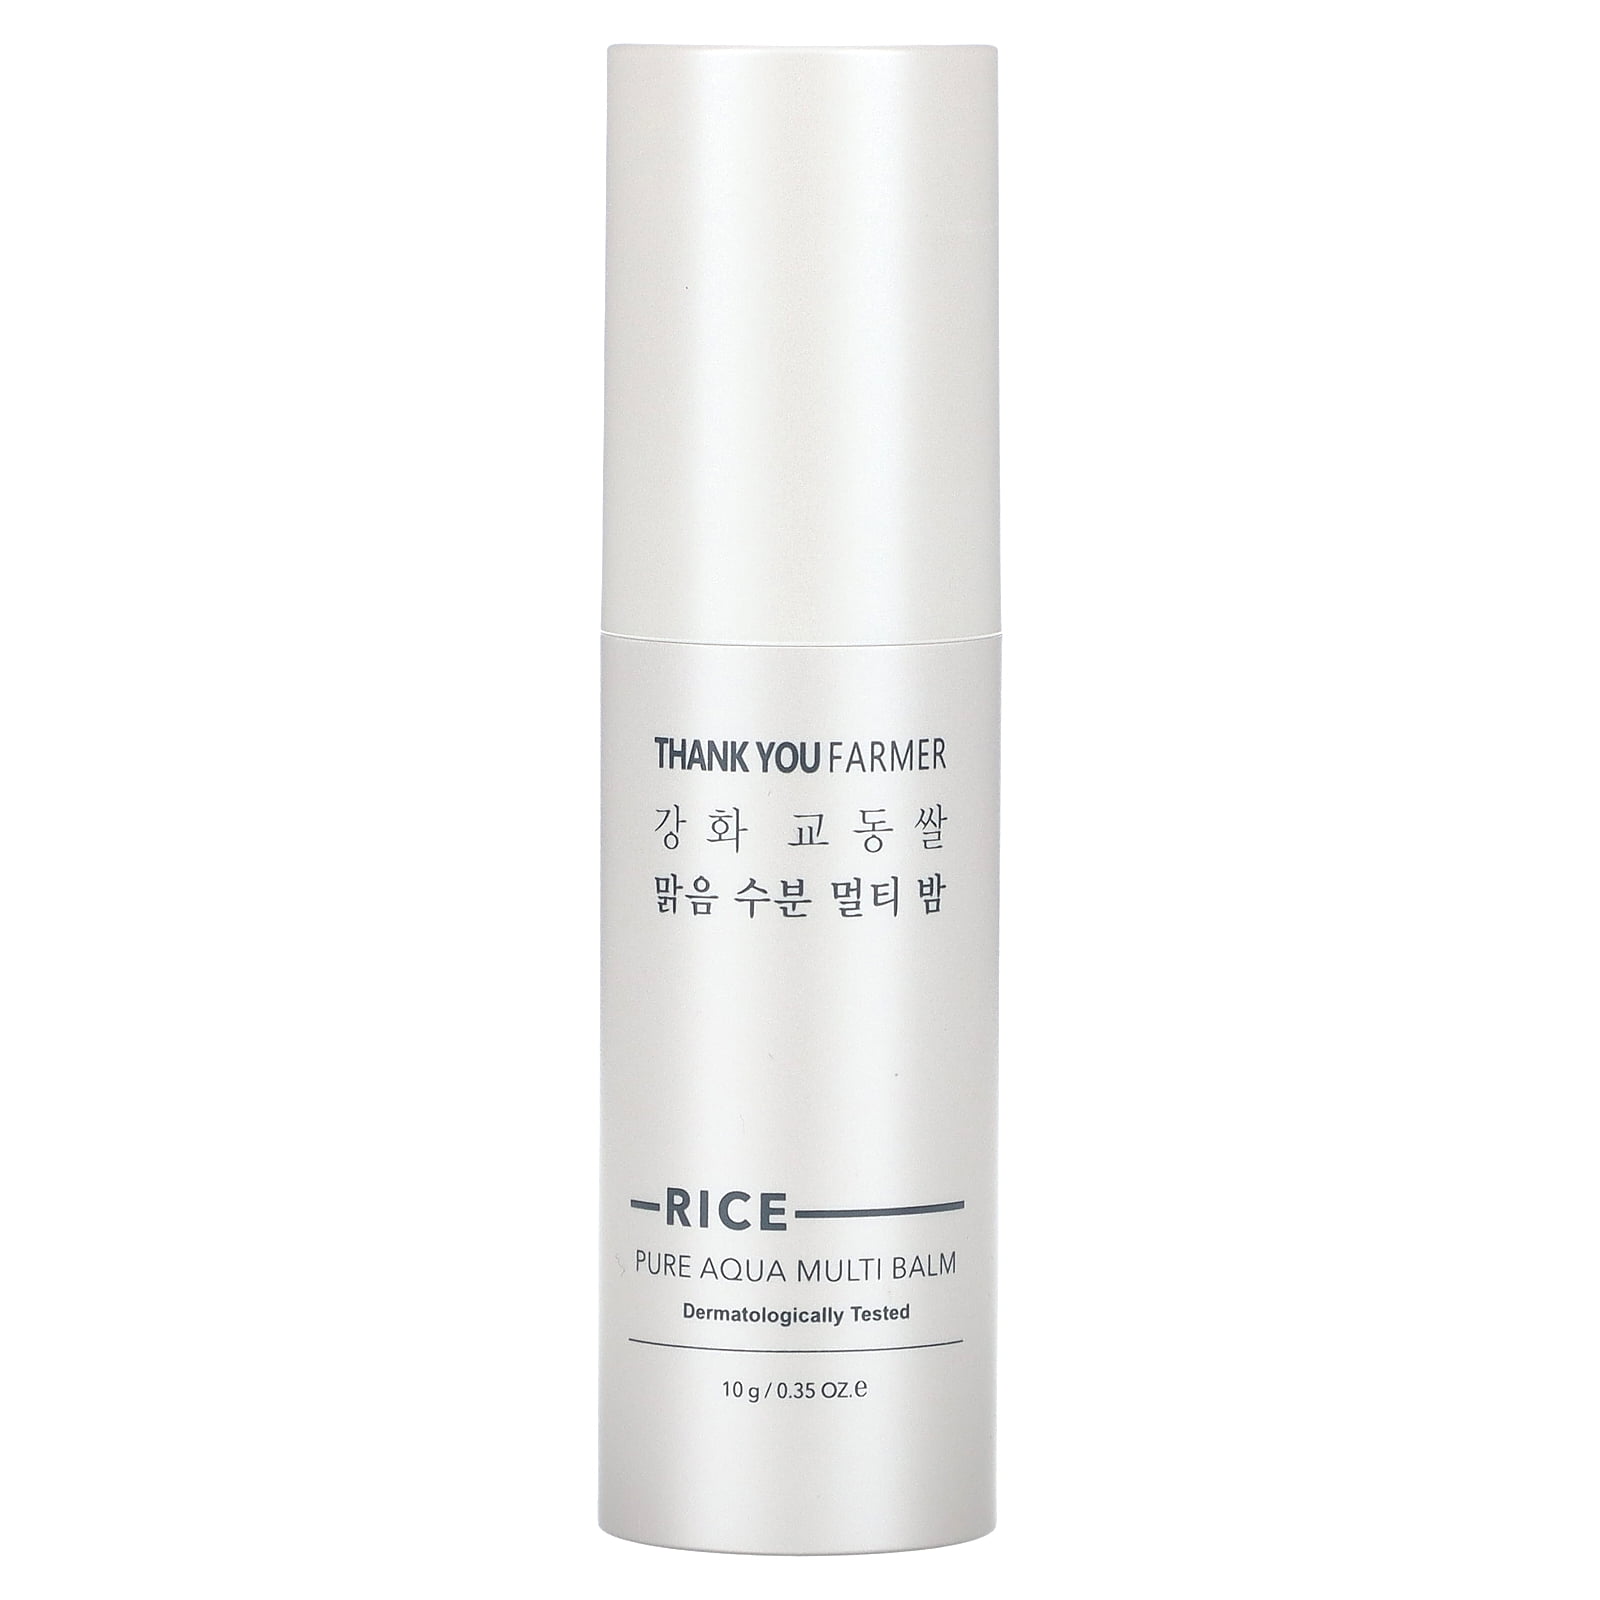 150ml Rice Face Toner Anti-aging Moisturizing Essential Toner Facial Skin  Care Brighten Improve Fine Line Korean Cosmetics - AliExpress